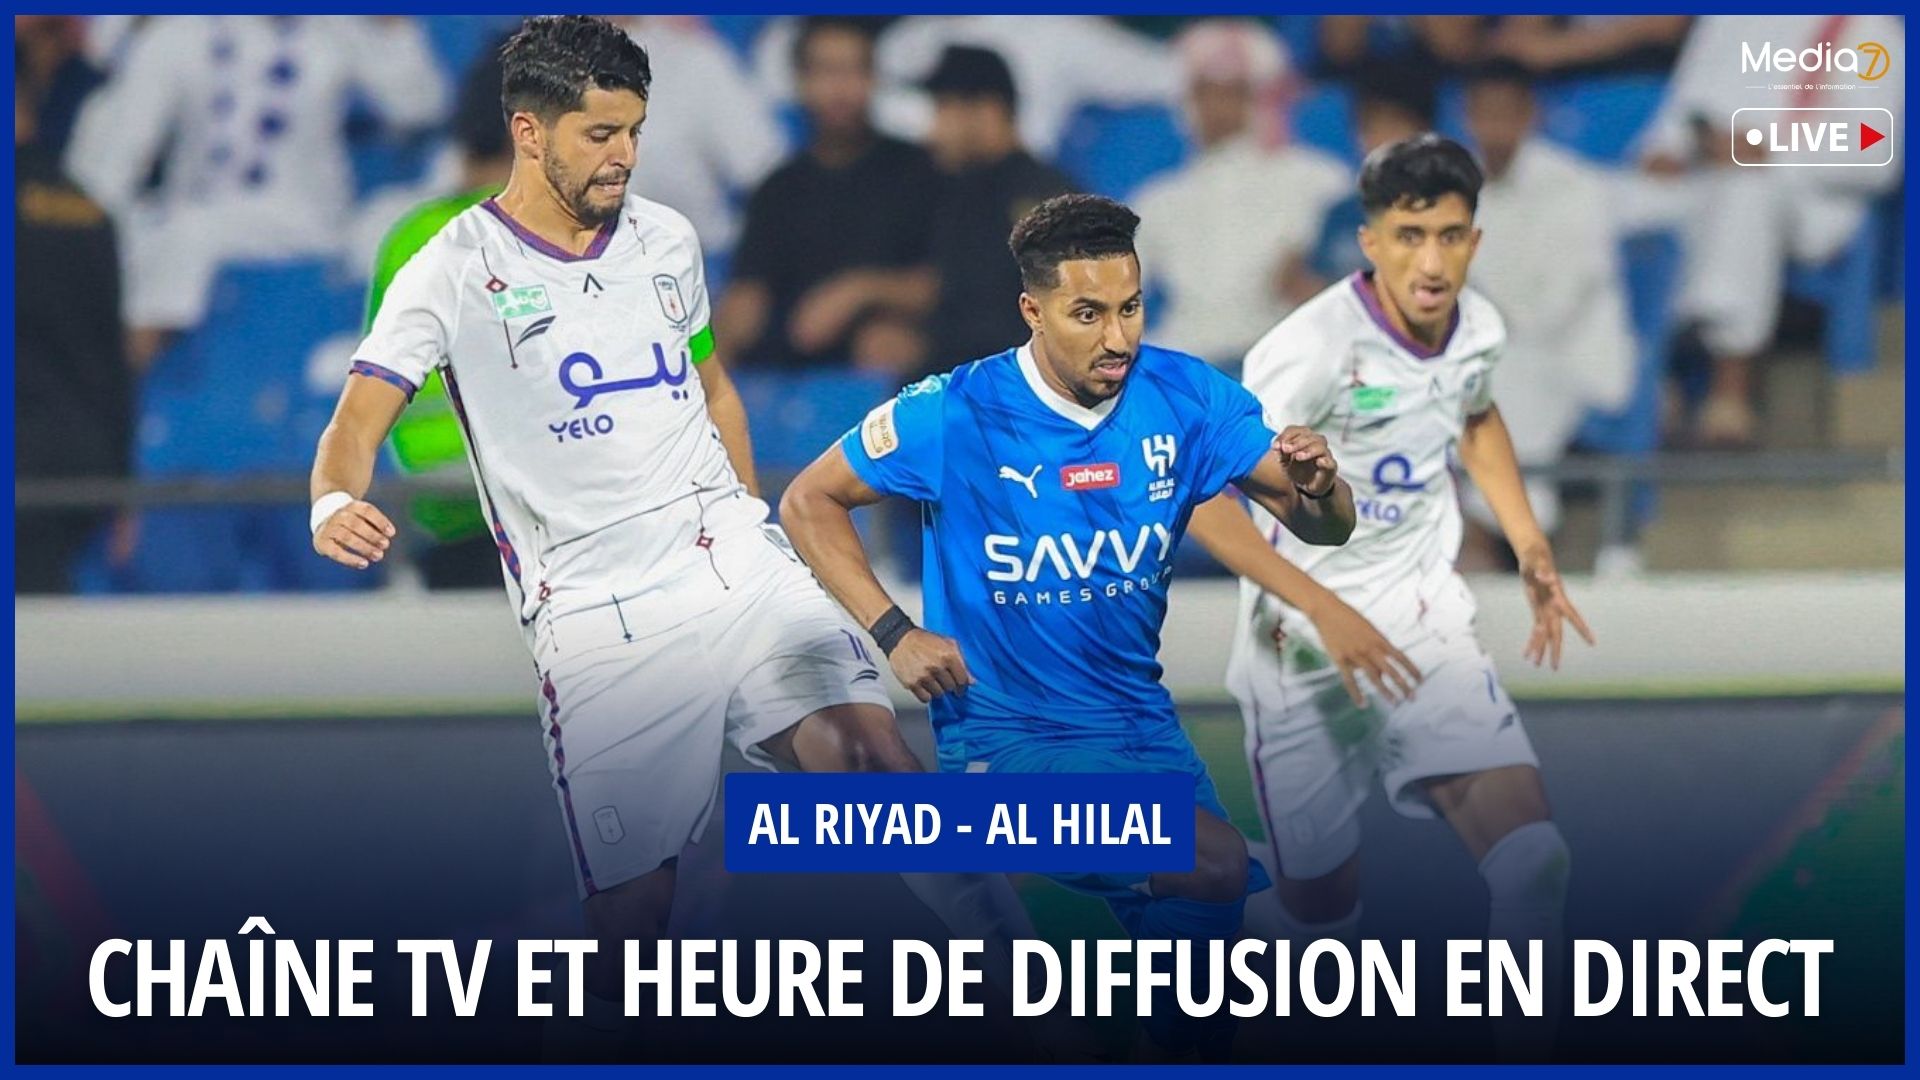 Match Al Riyadh - Al Hilal Live: TV Channel and Broadcast Time - Media7